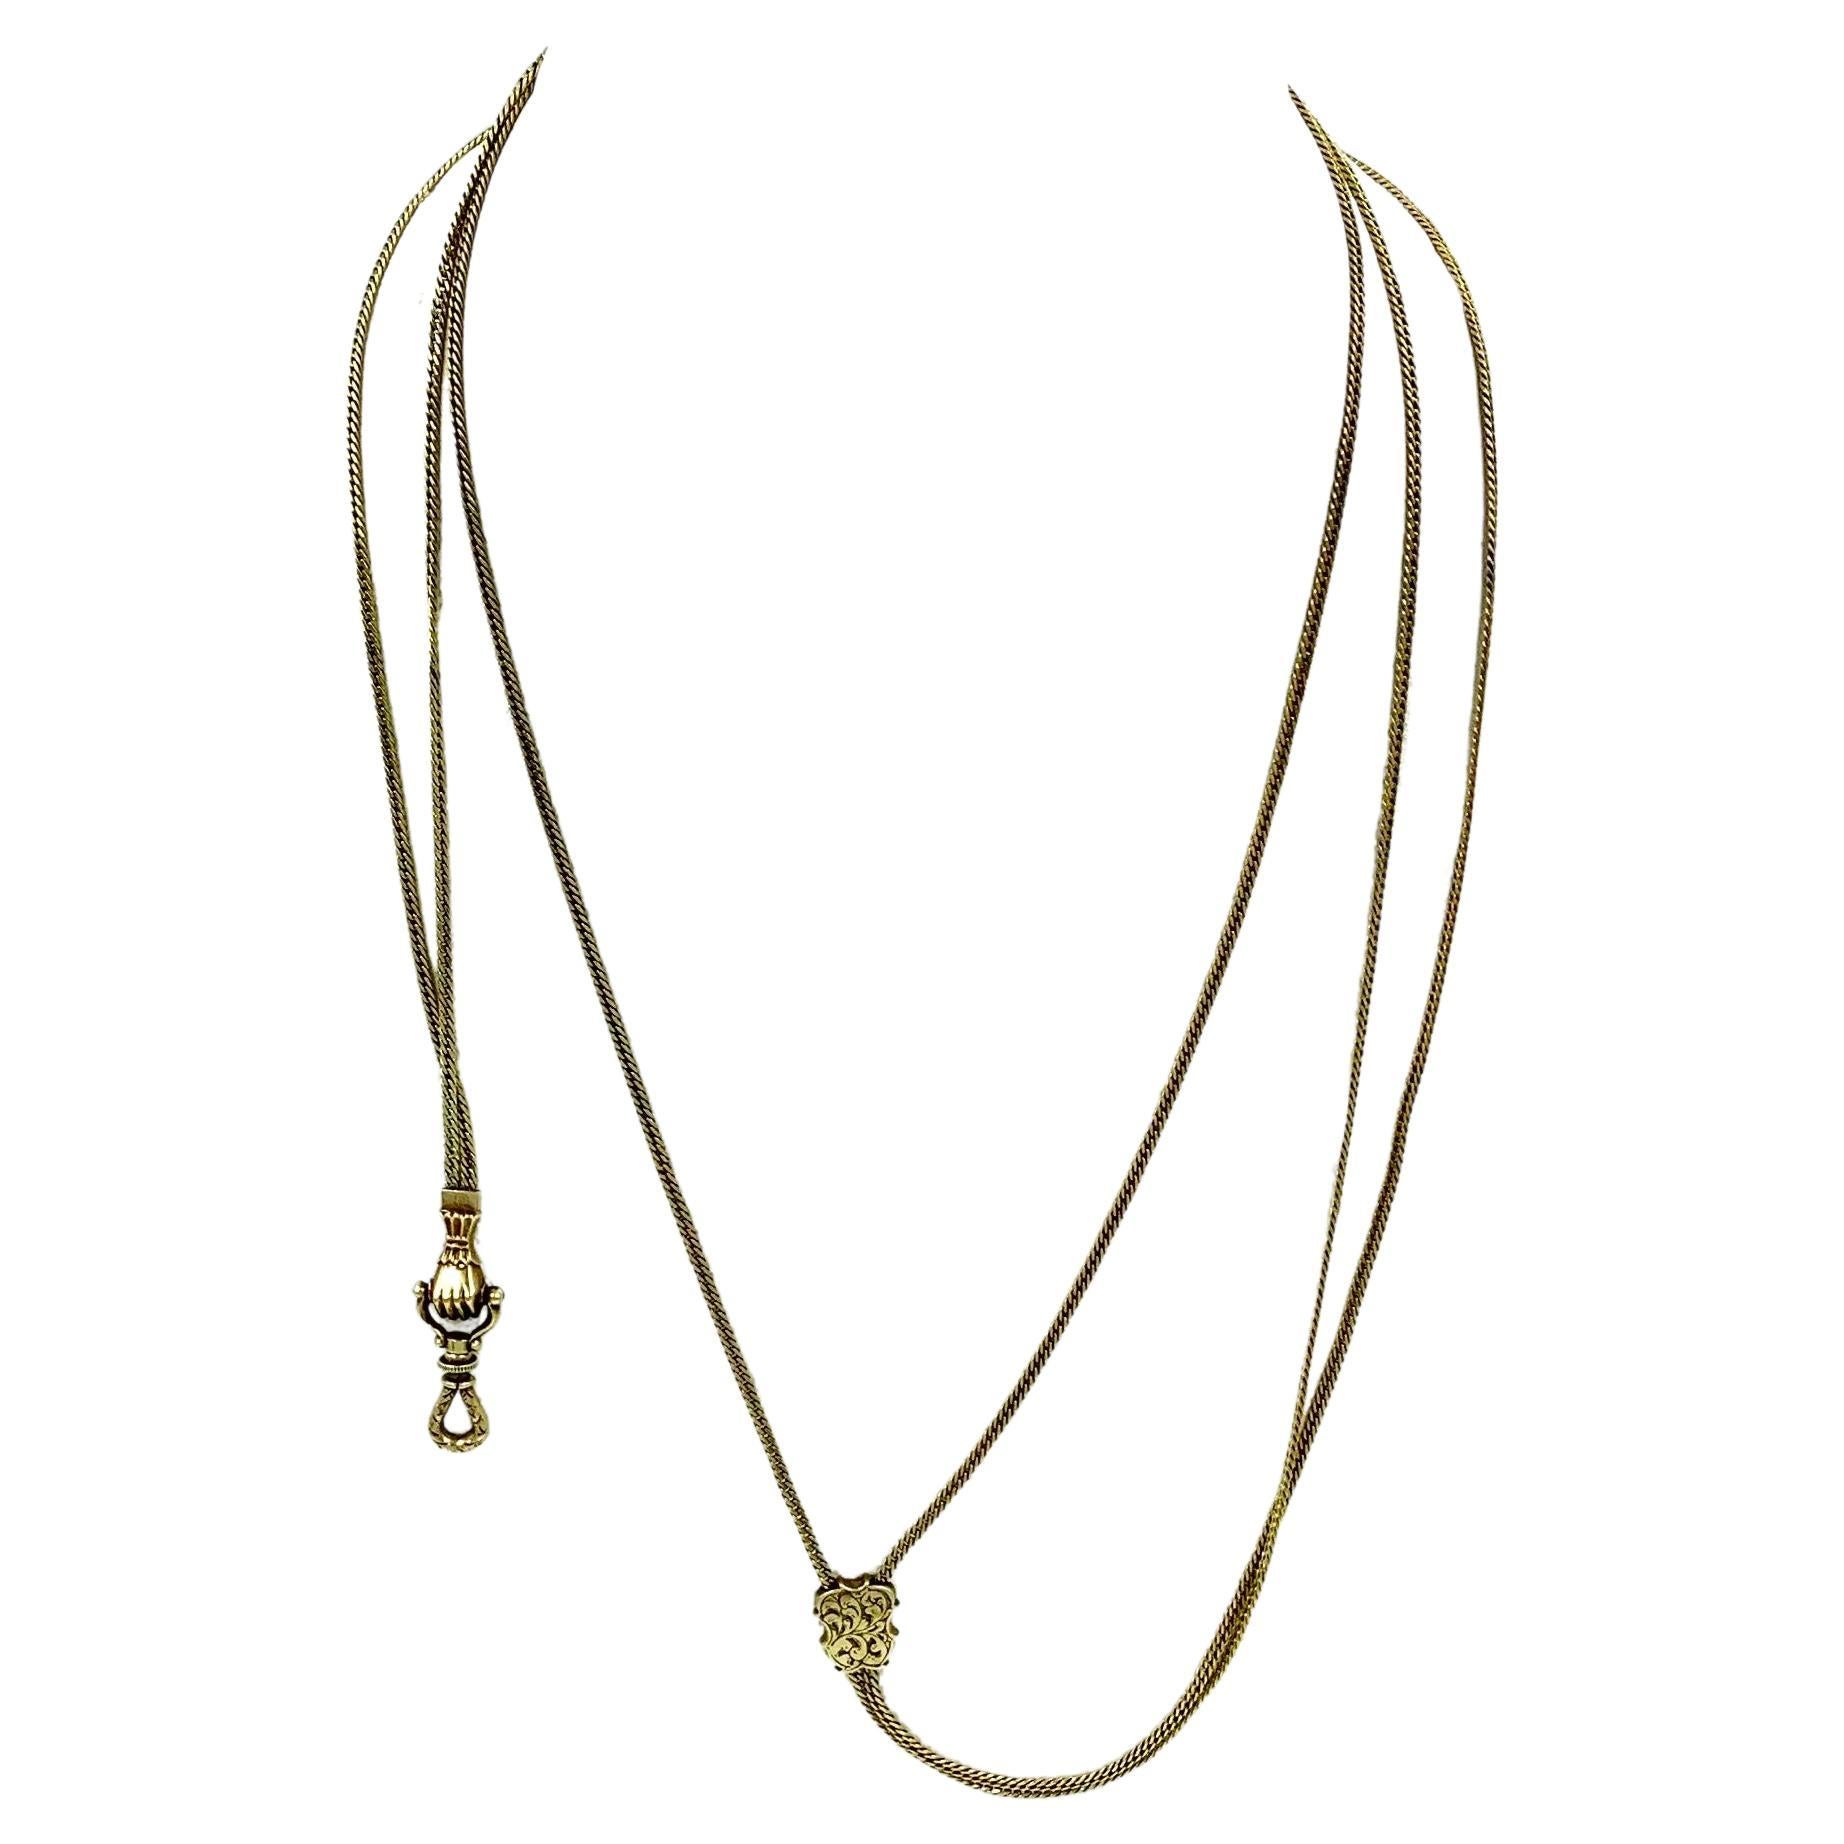 Exceptionally Long Antique 18K Gold Mano Sautoir Slide Chain Necklace Circa 1840